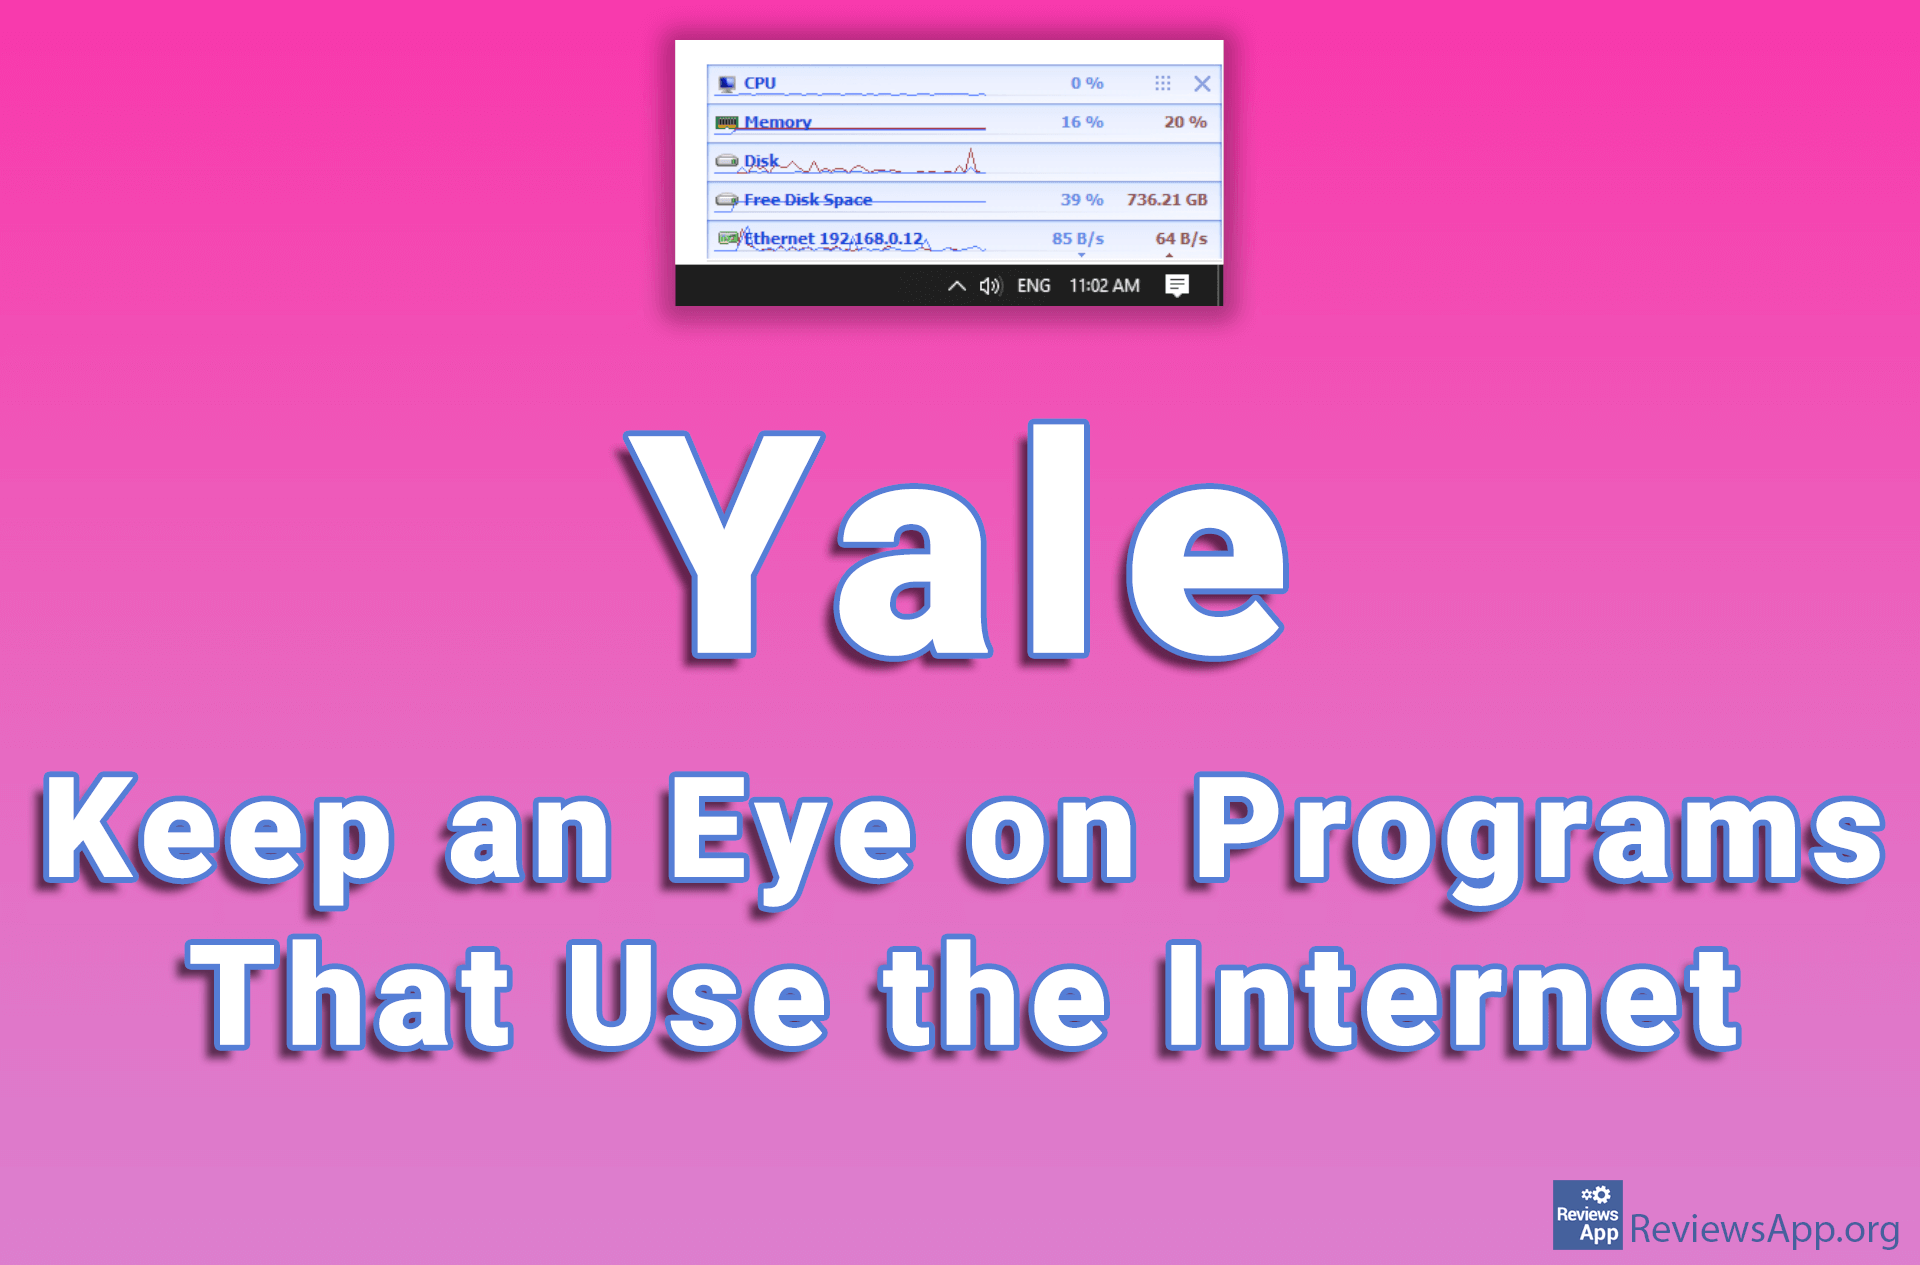 Yale – Keep an Eye on Programs That Use the Internet